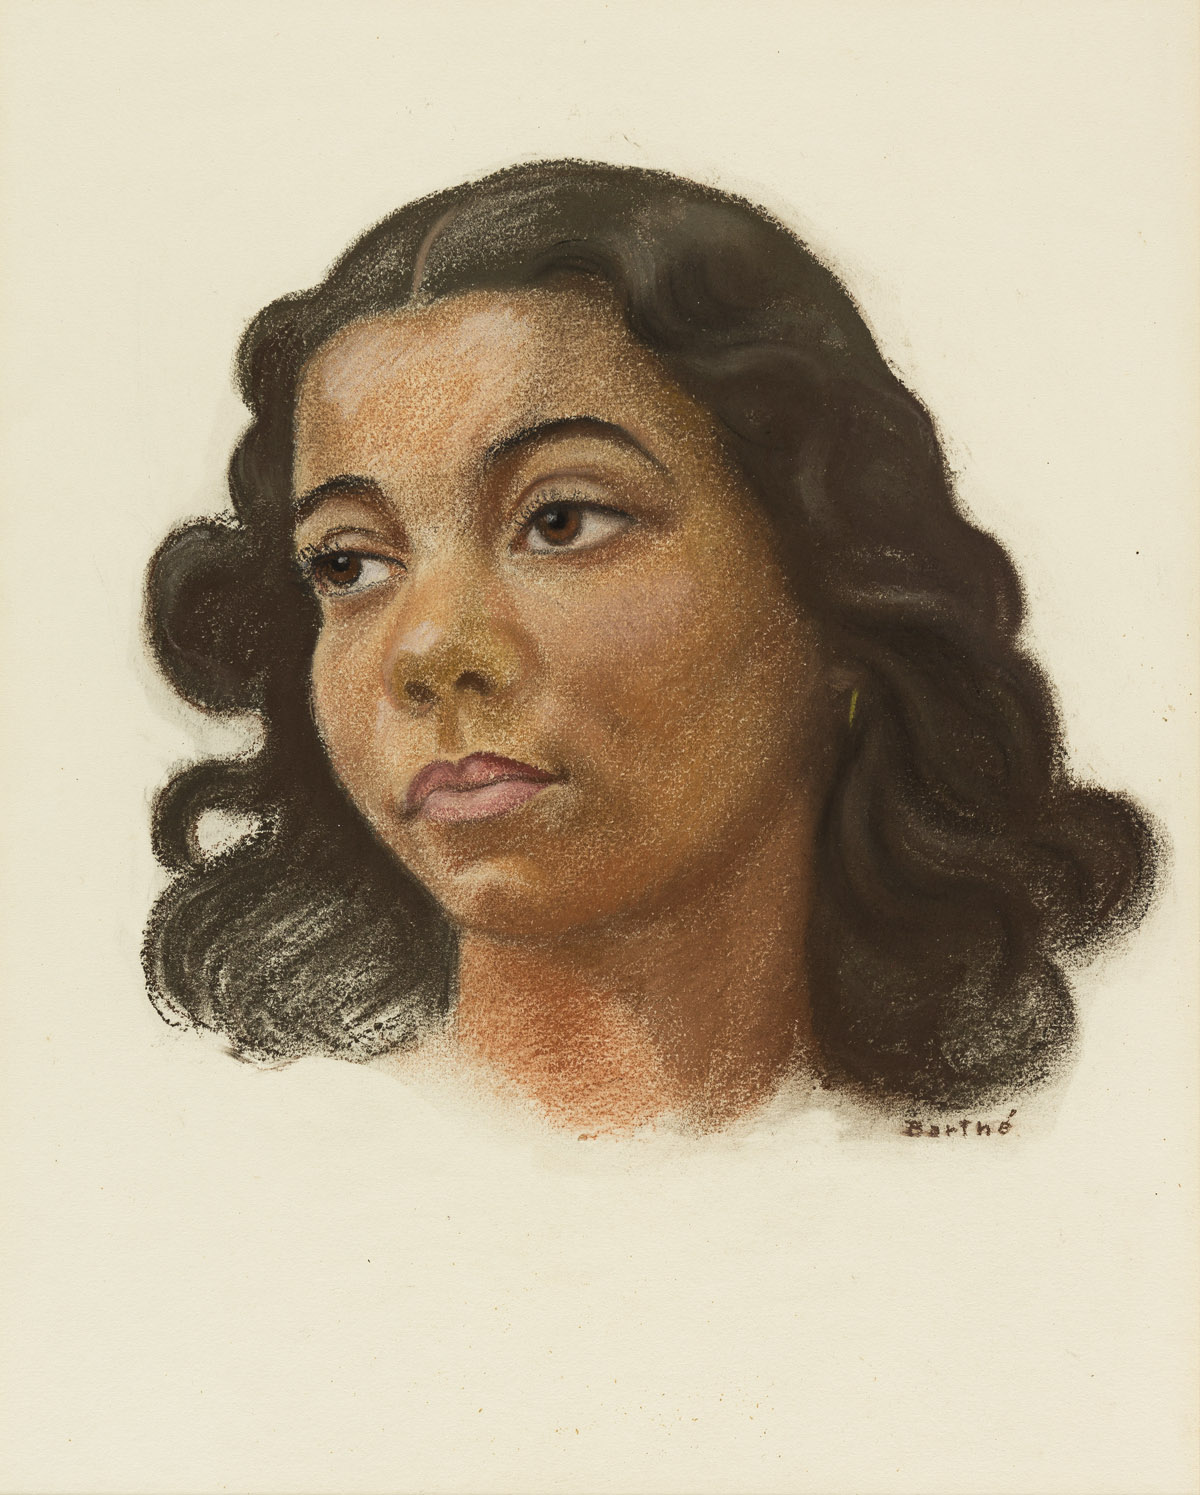 RICHMOND BARTHÉ (1909 - 1989) Untitled (Etta Vee Barnett).